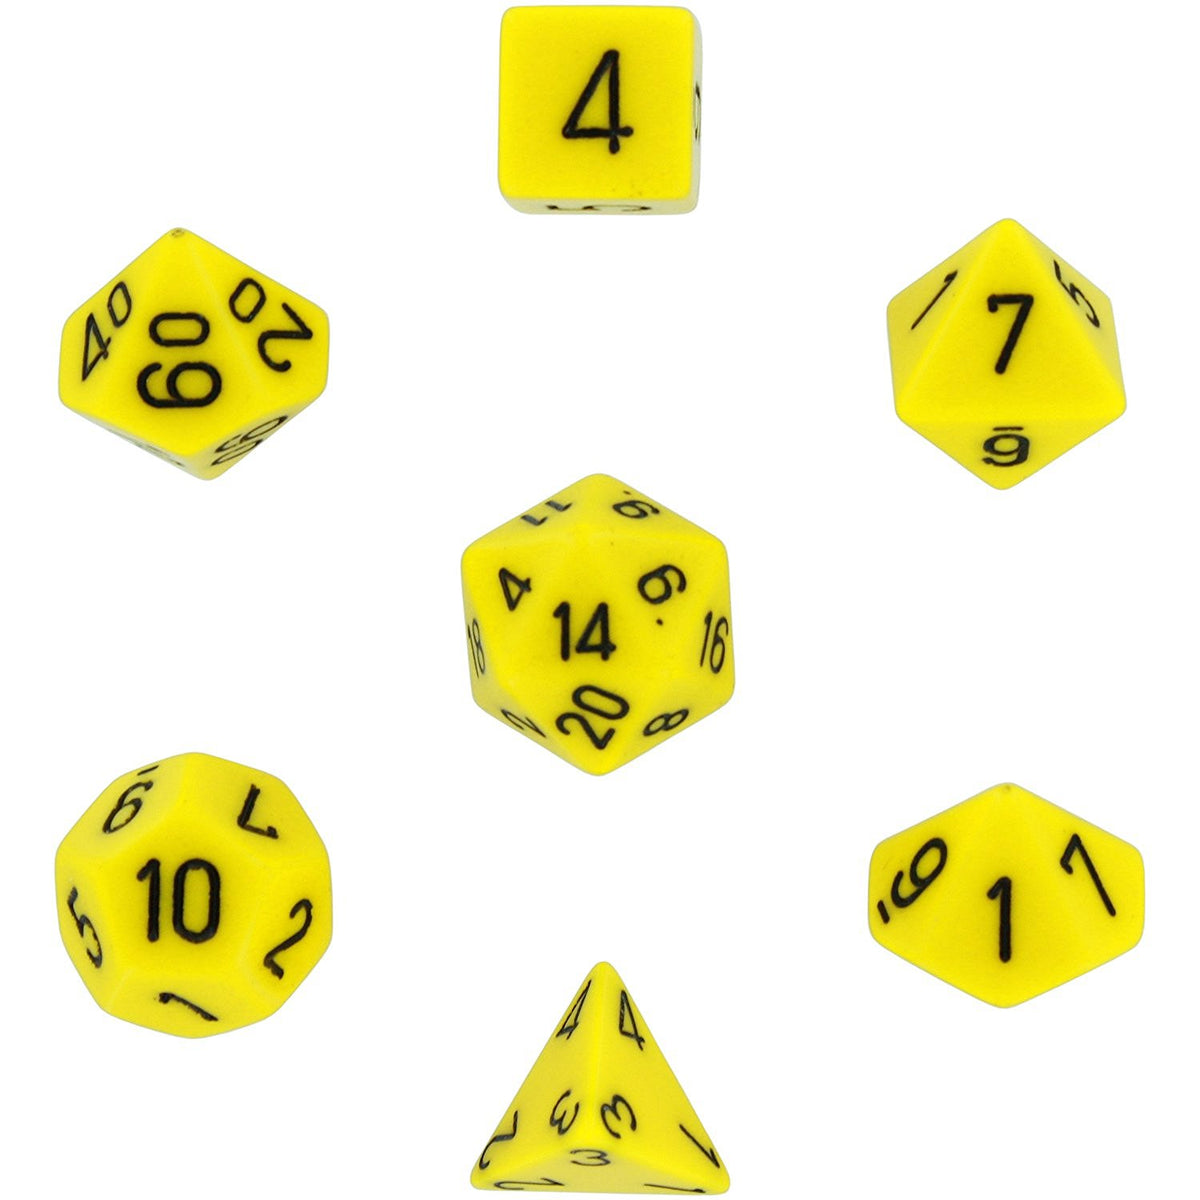 Chessex - Opaque Polyhedral 7-Die Set - Yellow/Black (CHX25402)